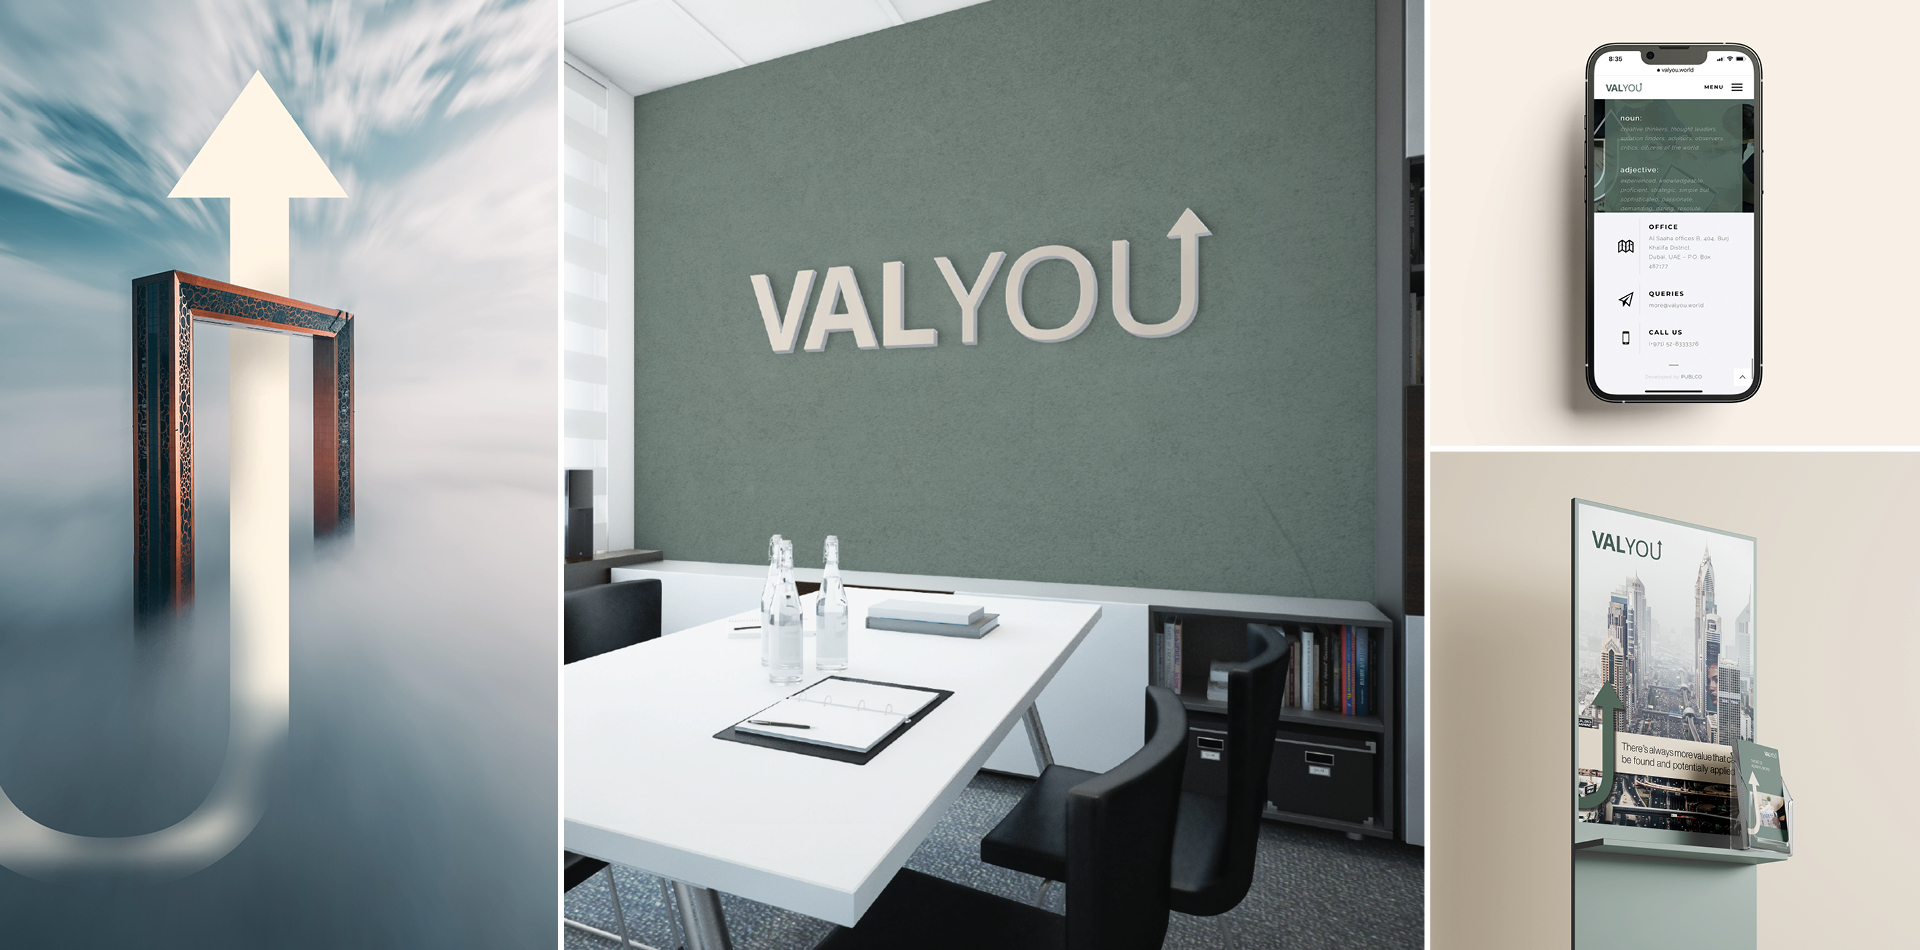 VALYOU - Case Study10